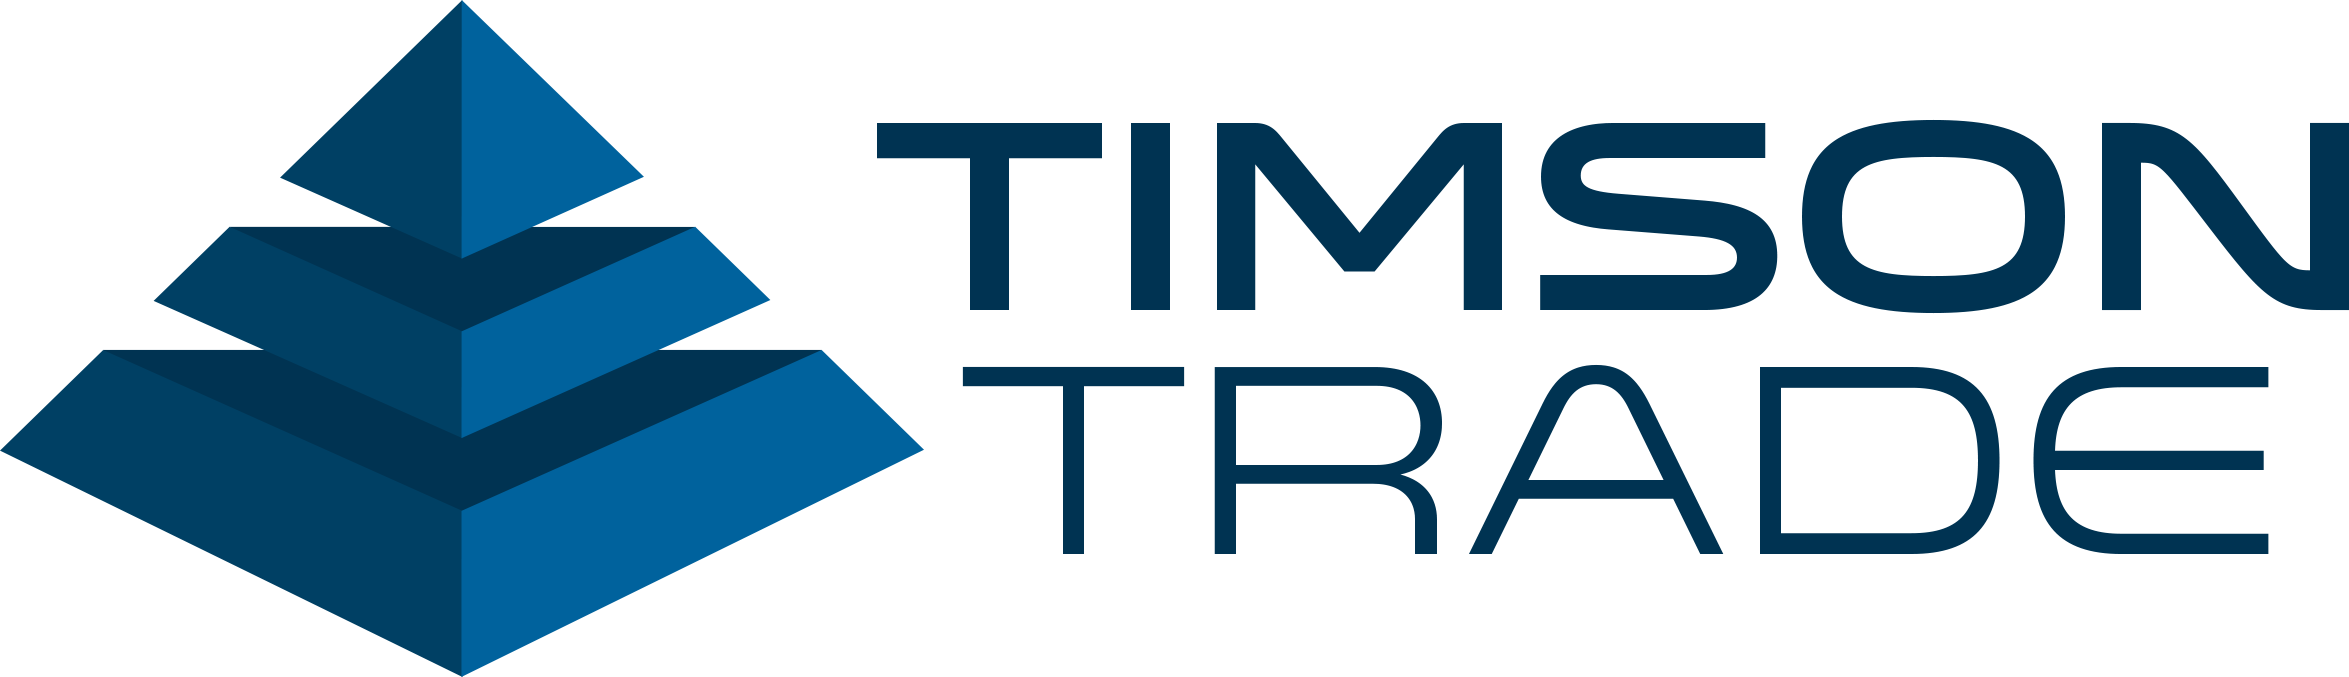 Timson Trade Chart